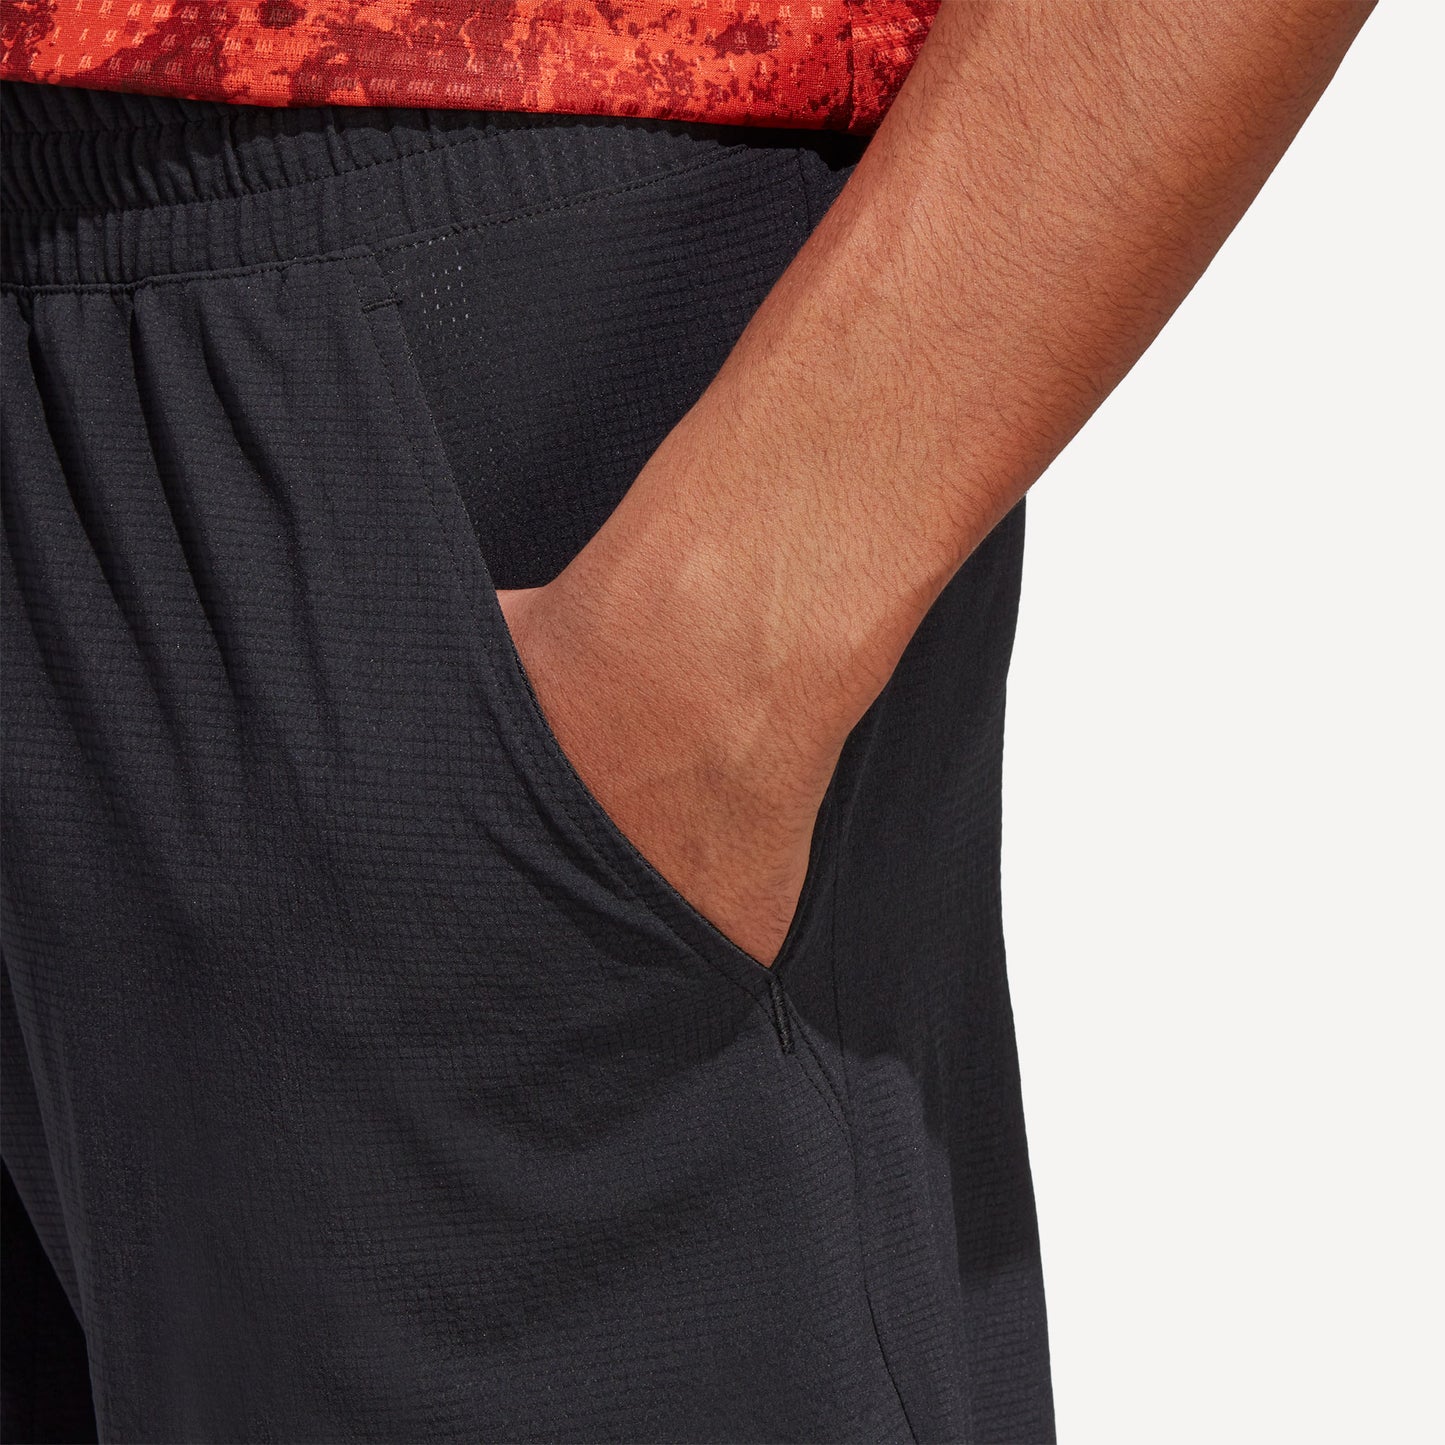 adidas Ergo Men's 9-Inch Tennis Shorts Black (7)